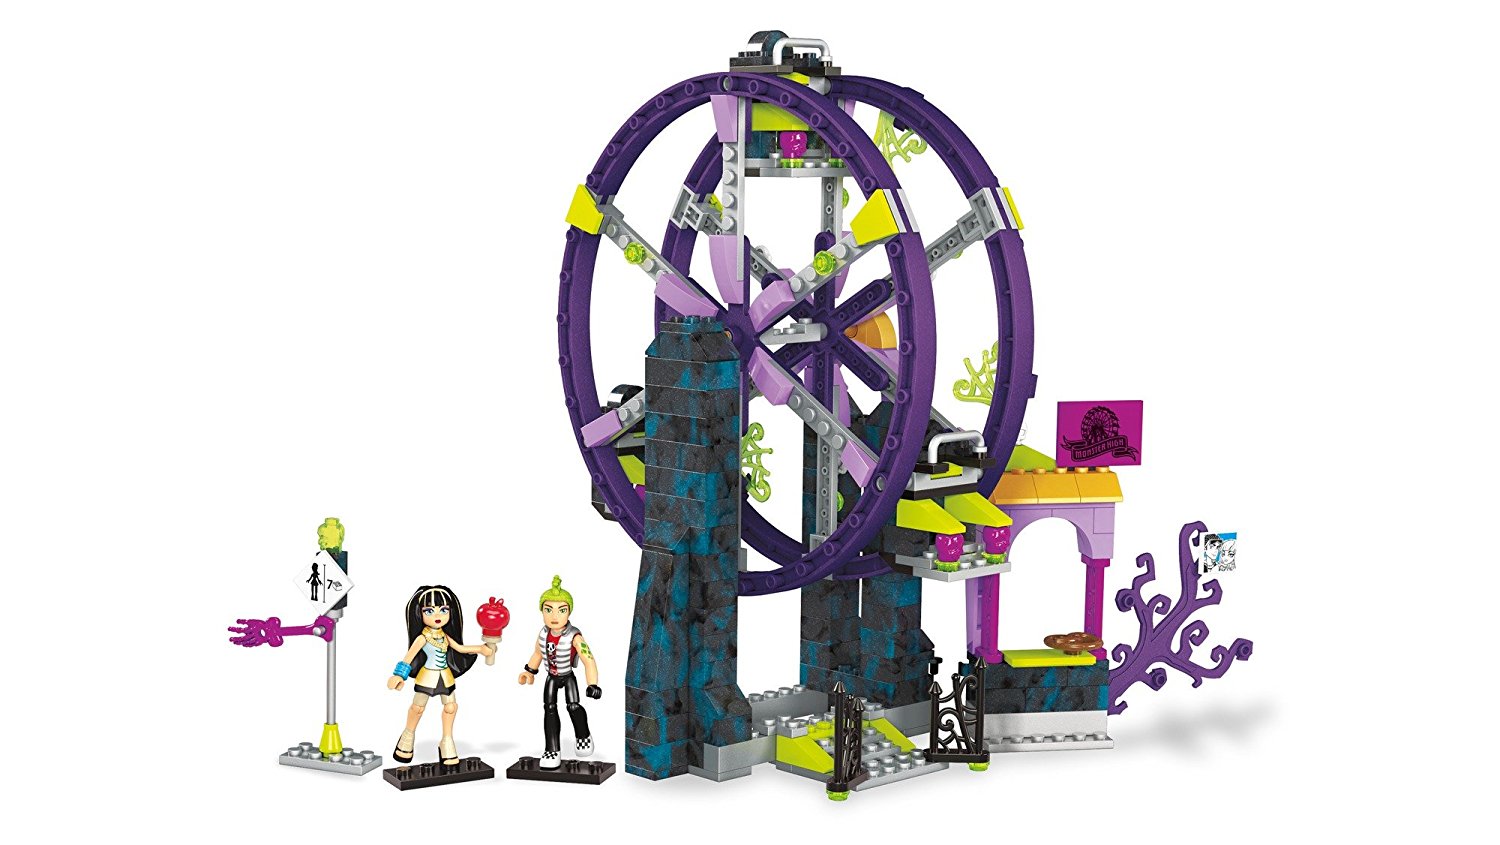 Mega Construx Monster High School Carnival Building Set Action Figure Only $13.95! (Reg $29.99)